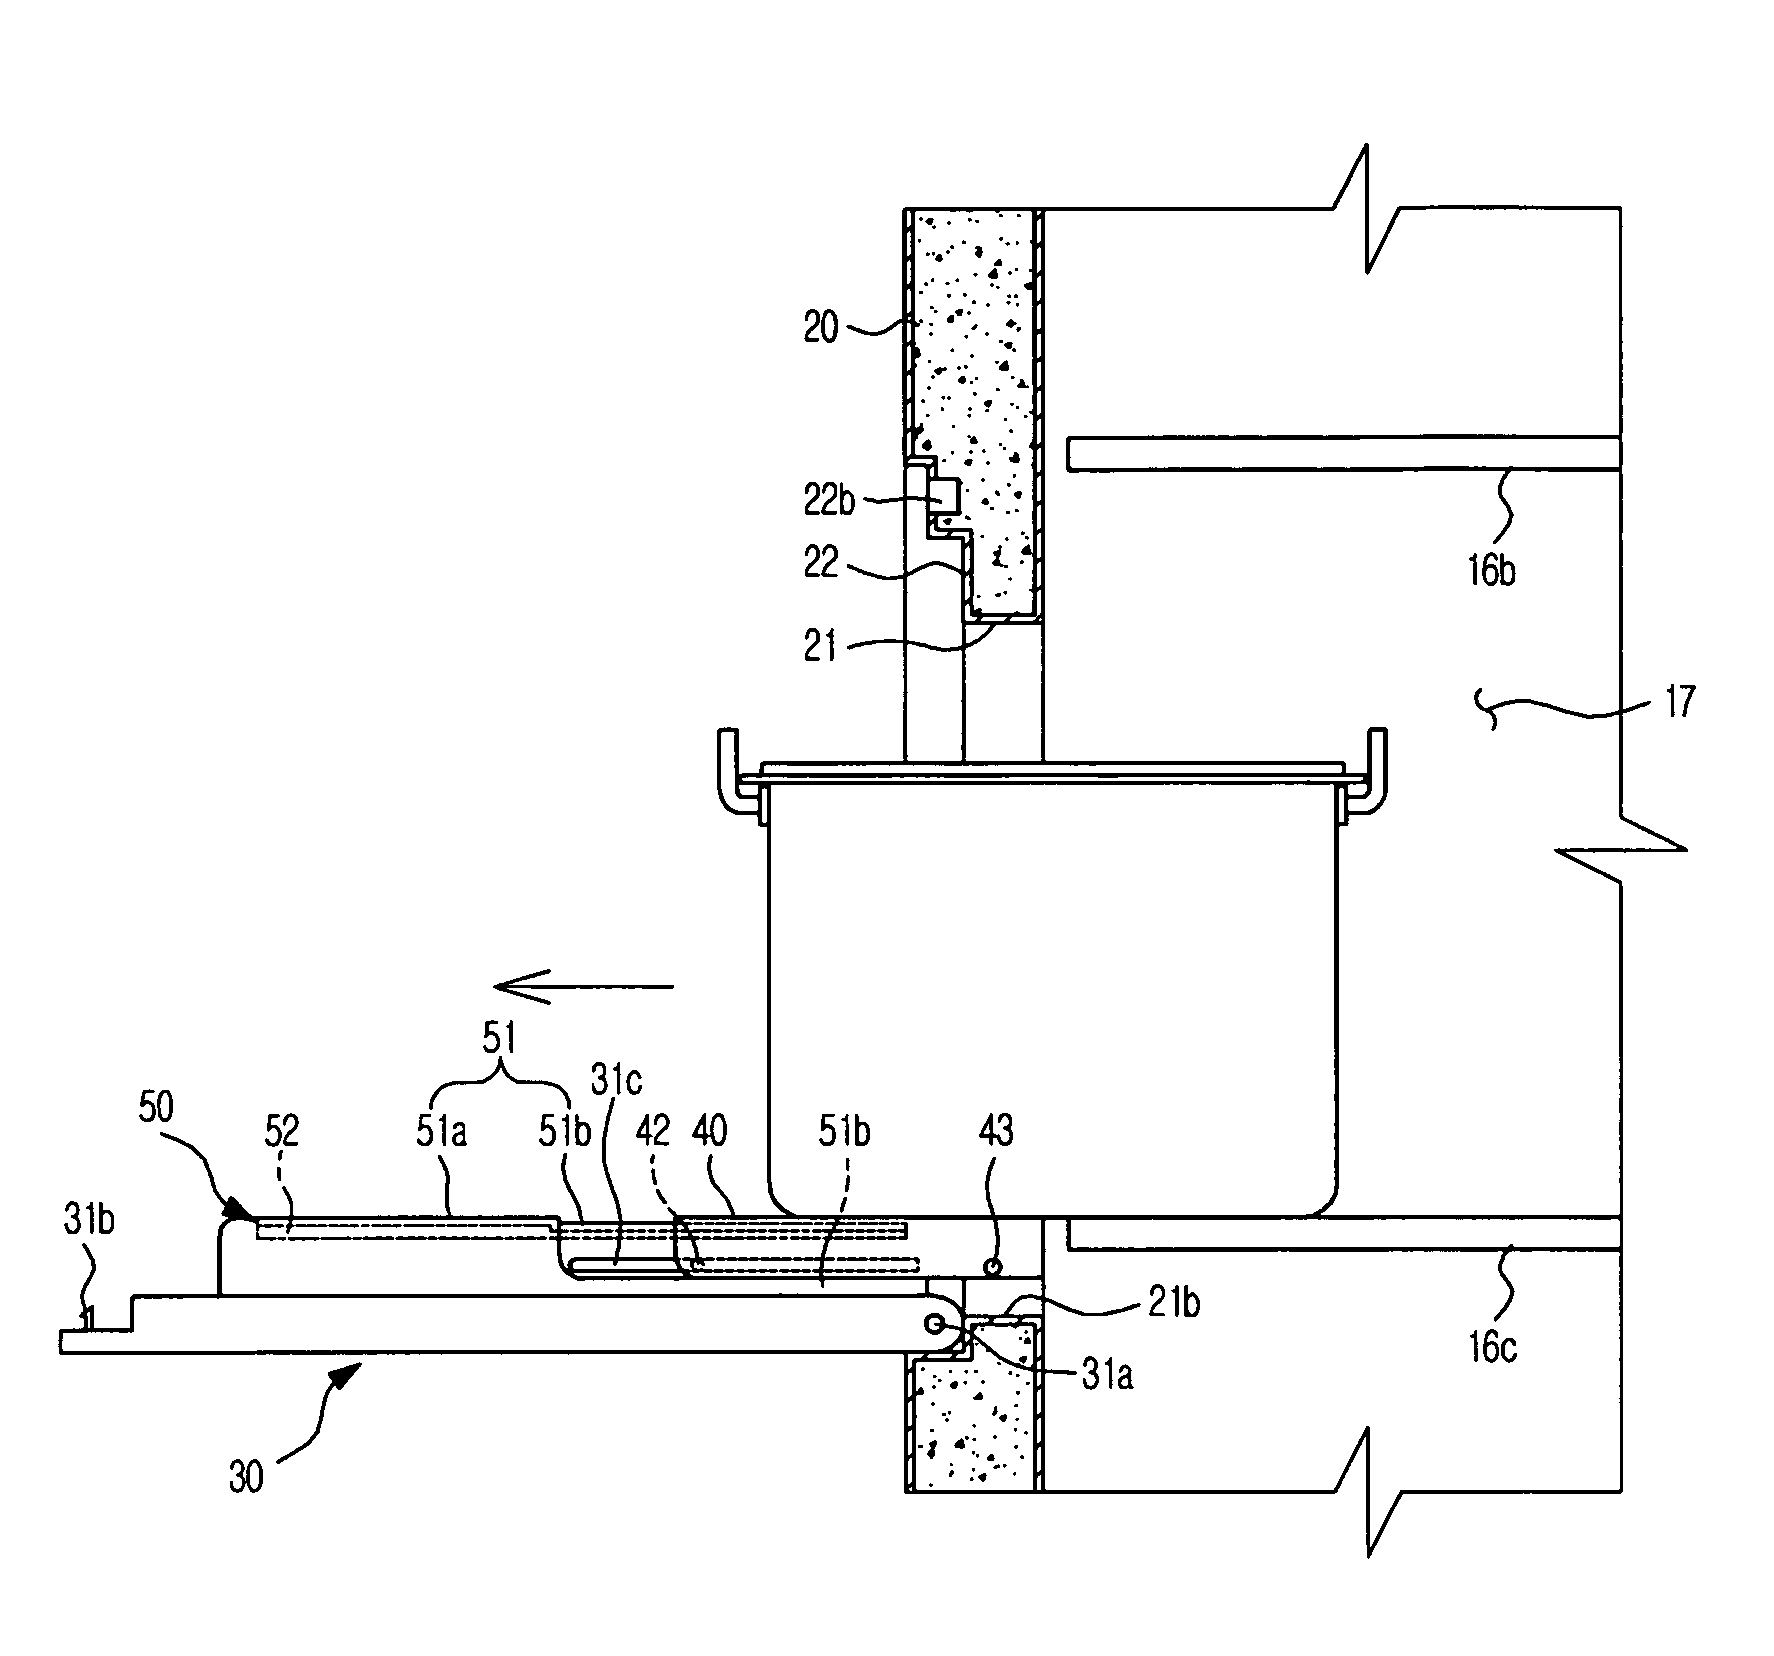 Refrigerator having sub door and manufacturing method of sub door